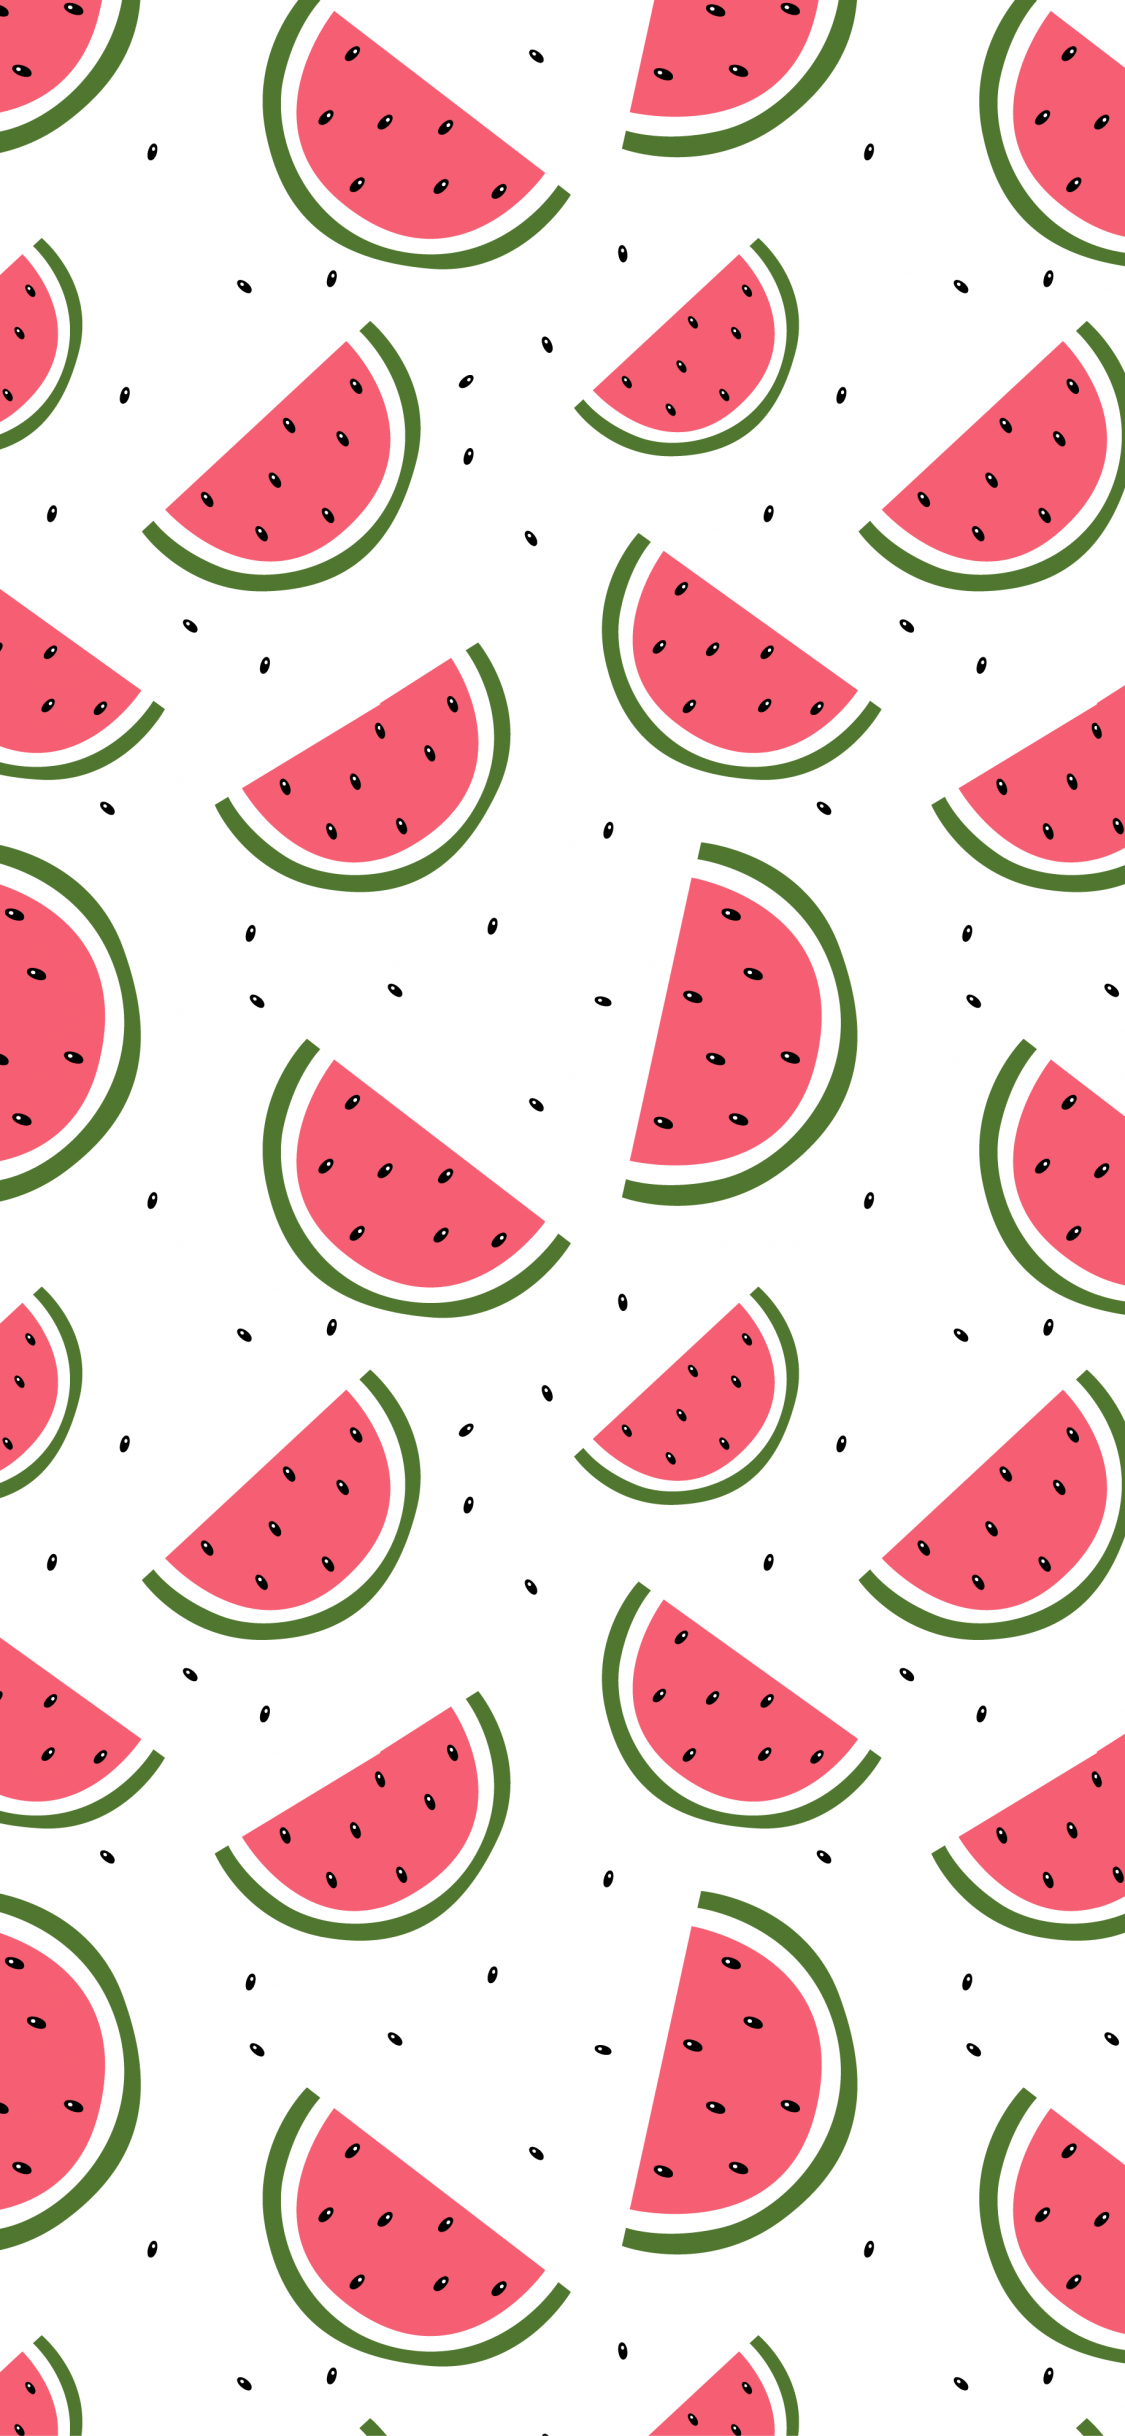 Watermelon Wallpaper Pack